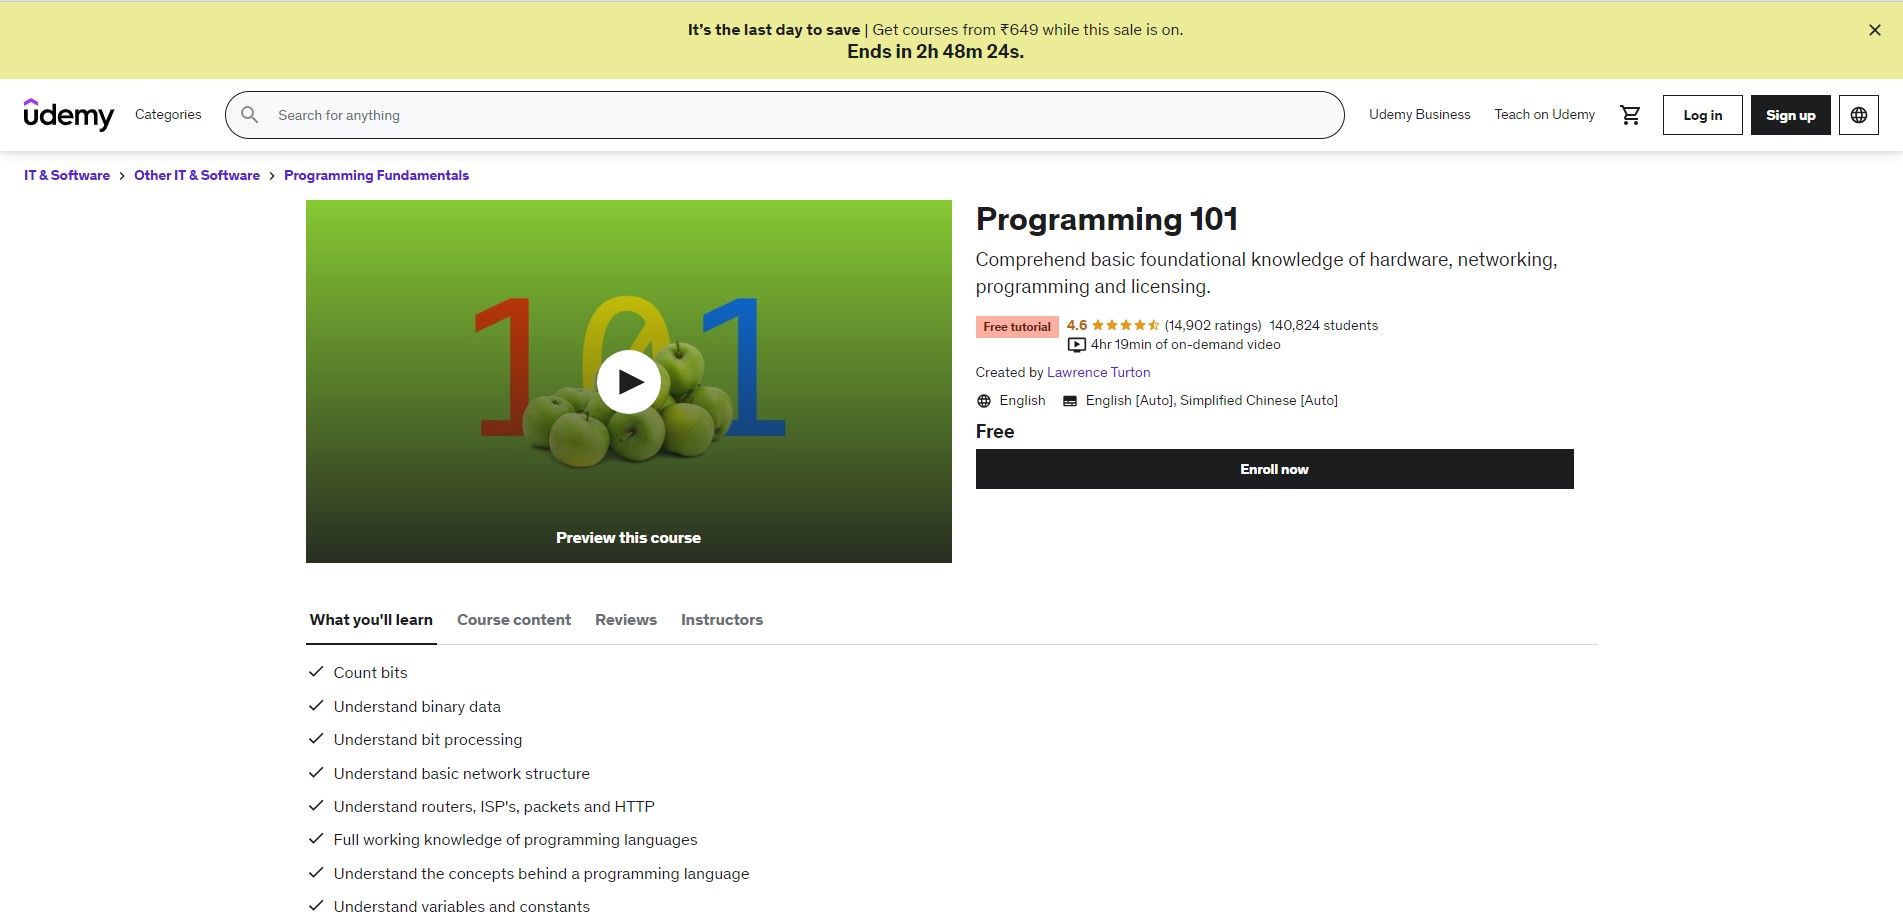 Programming 101 course details on website